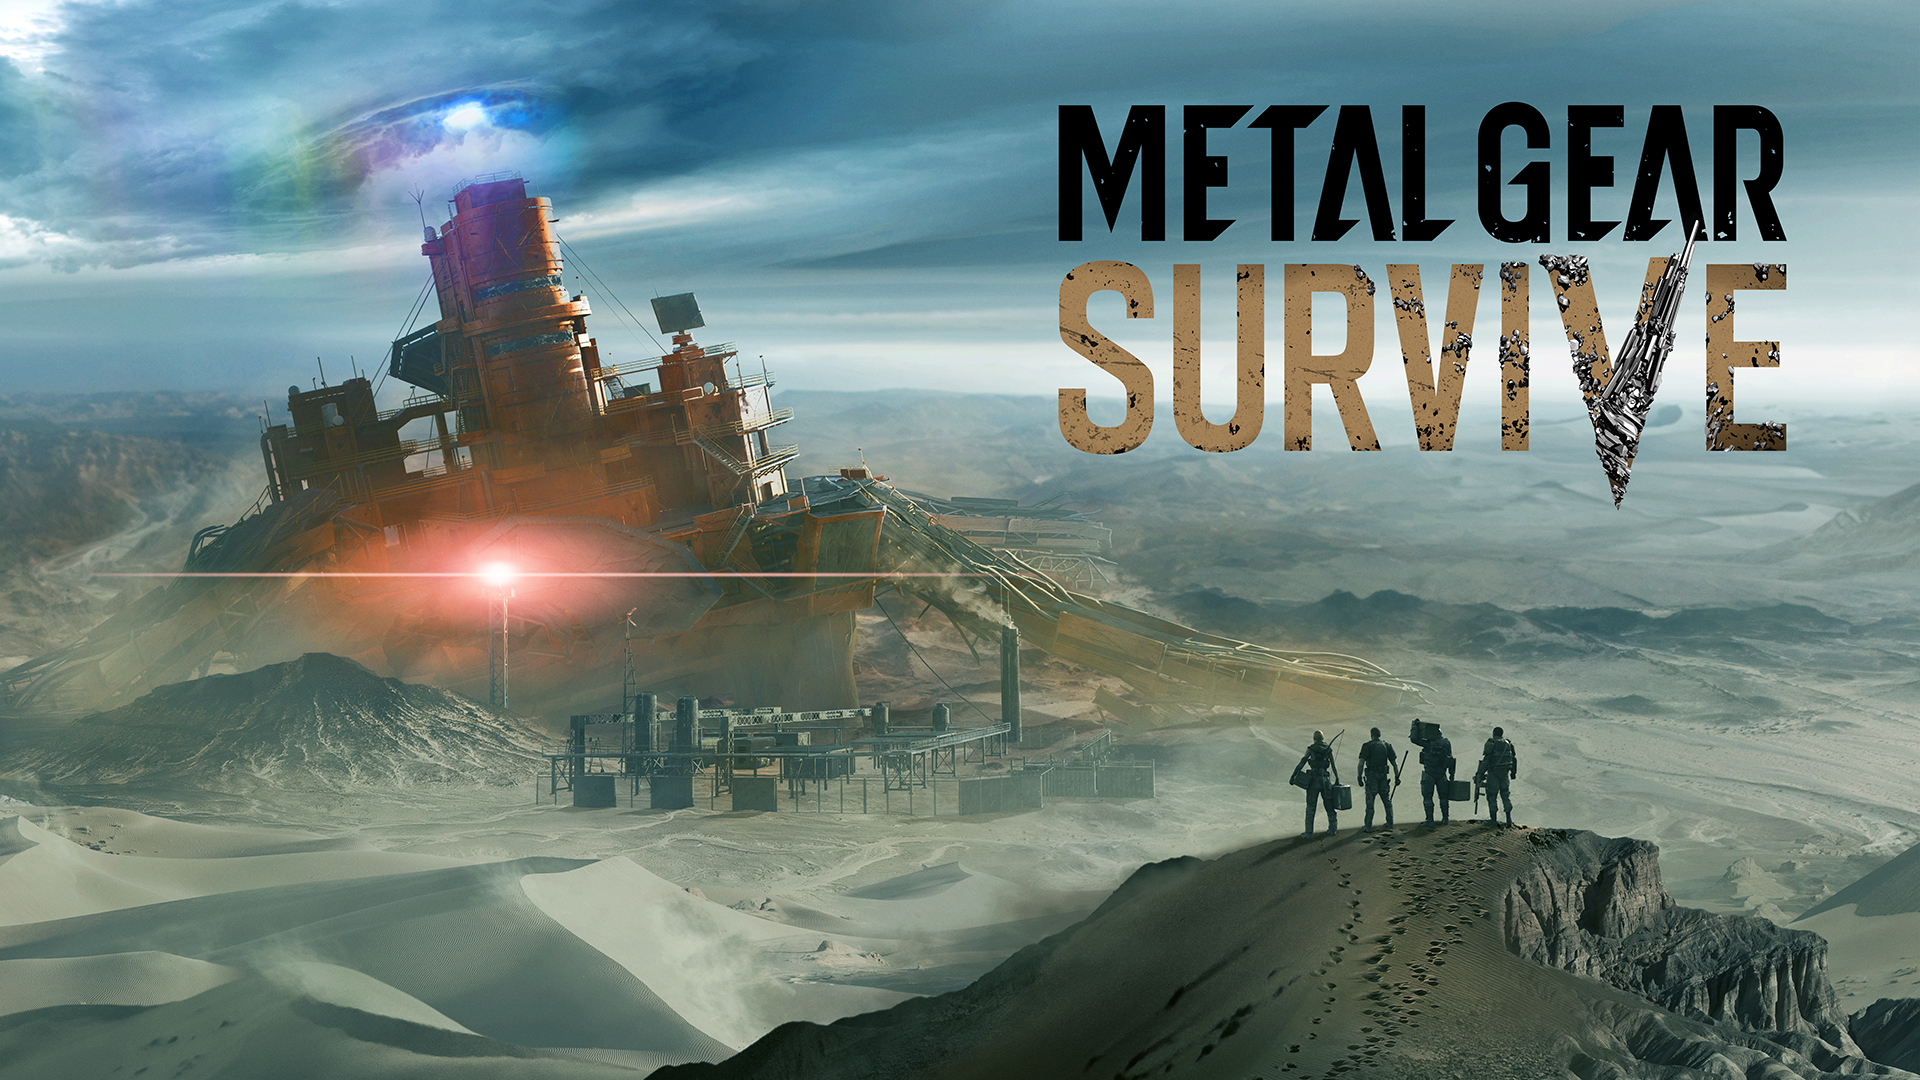 Metal Gear: Survive